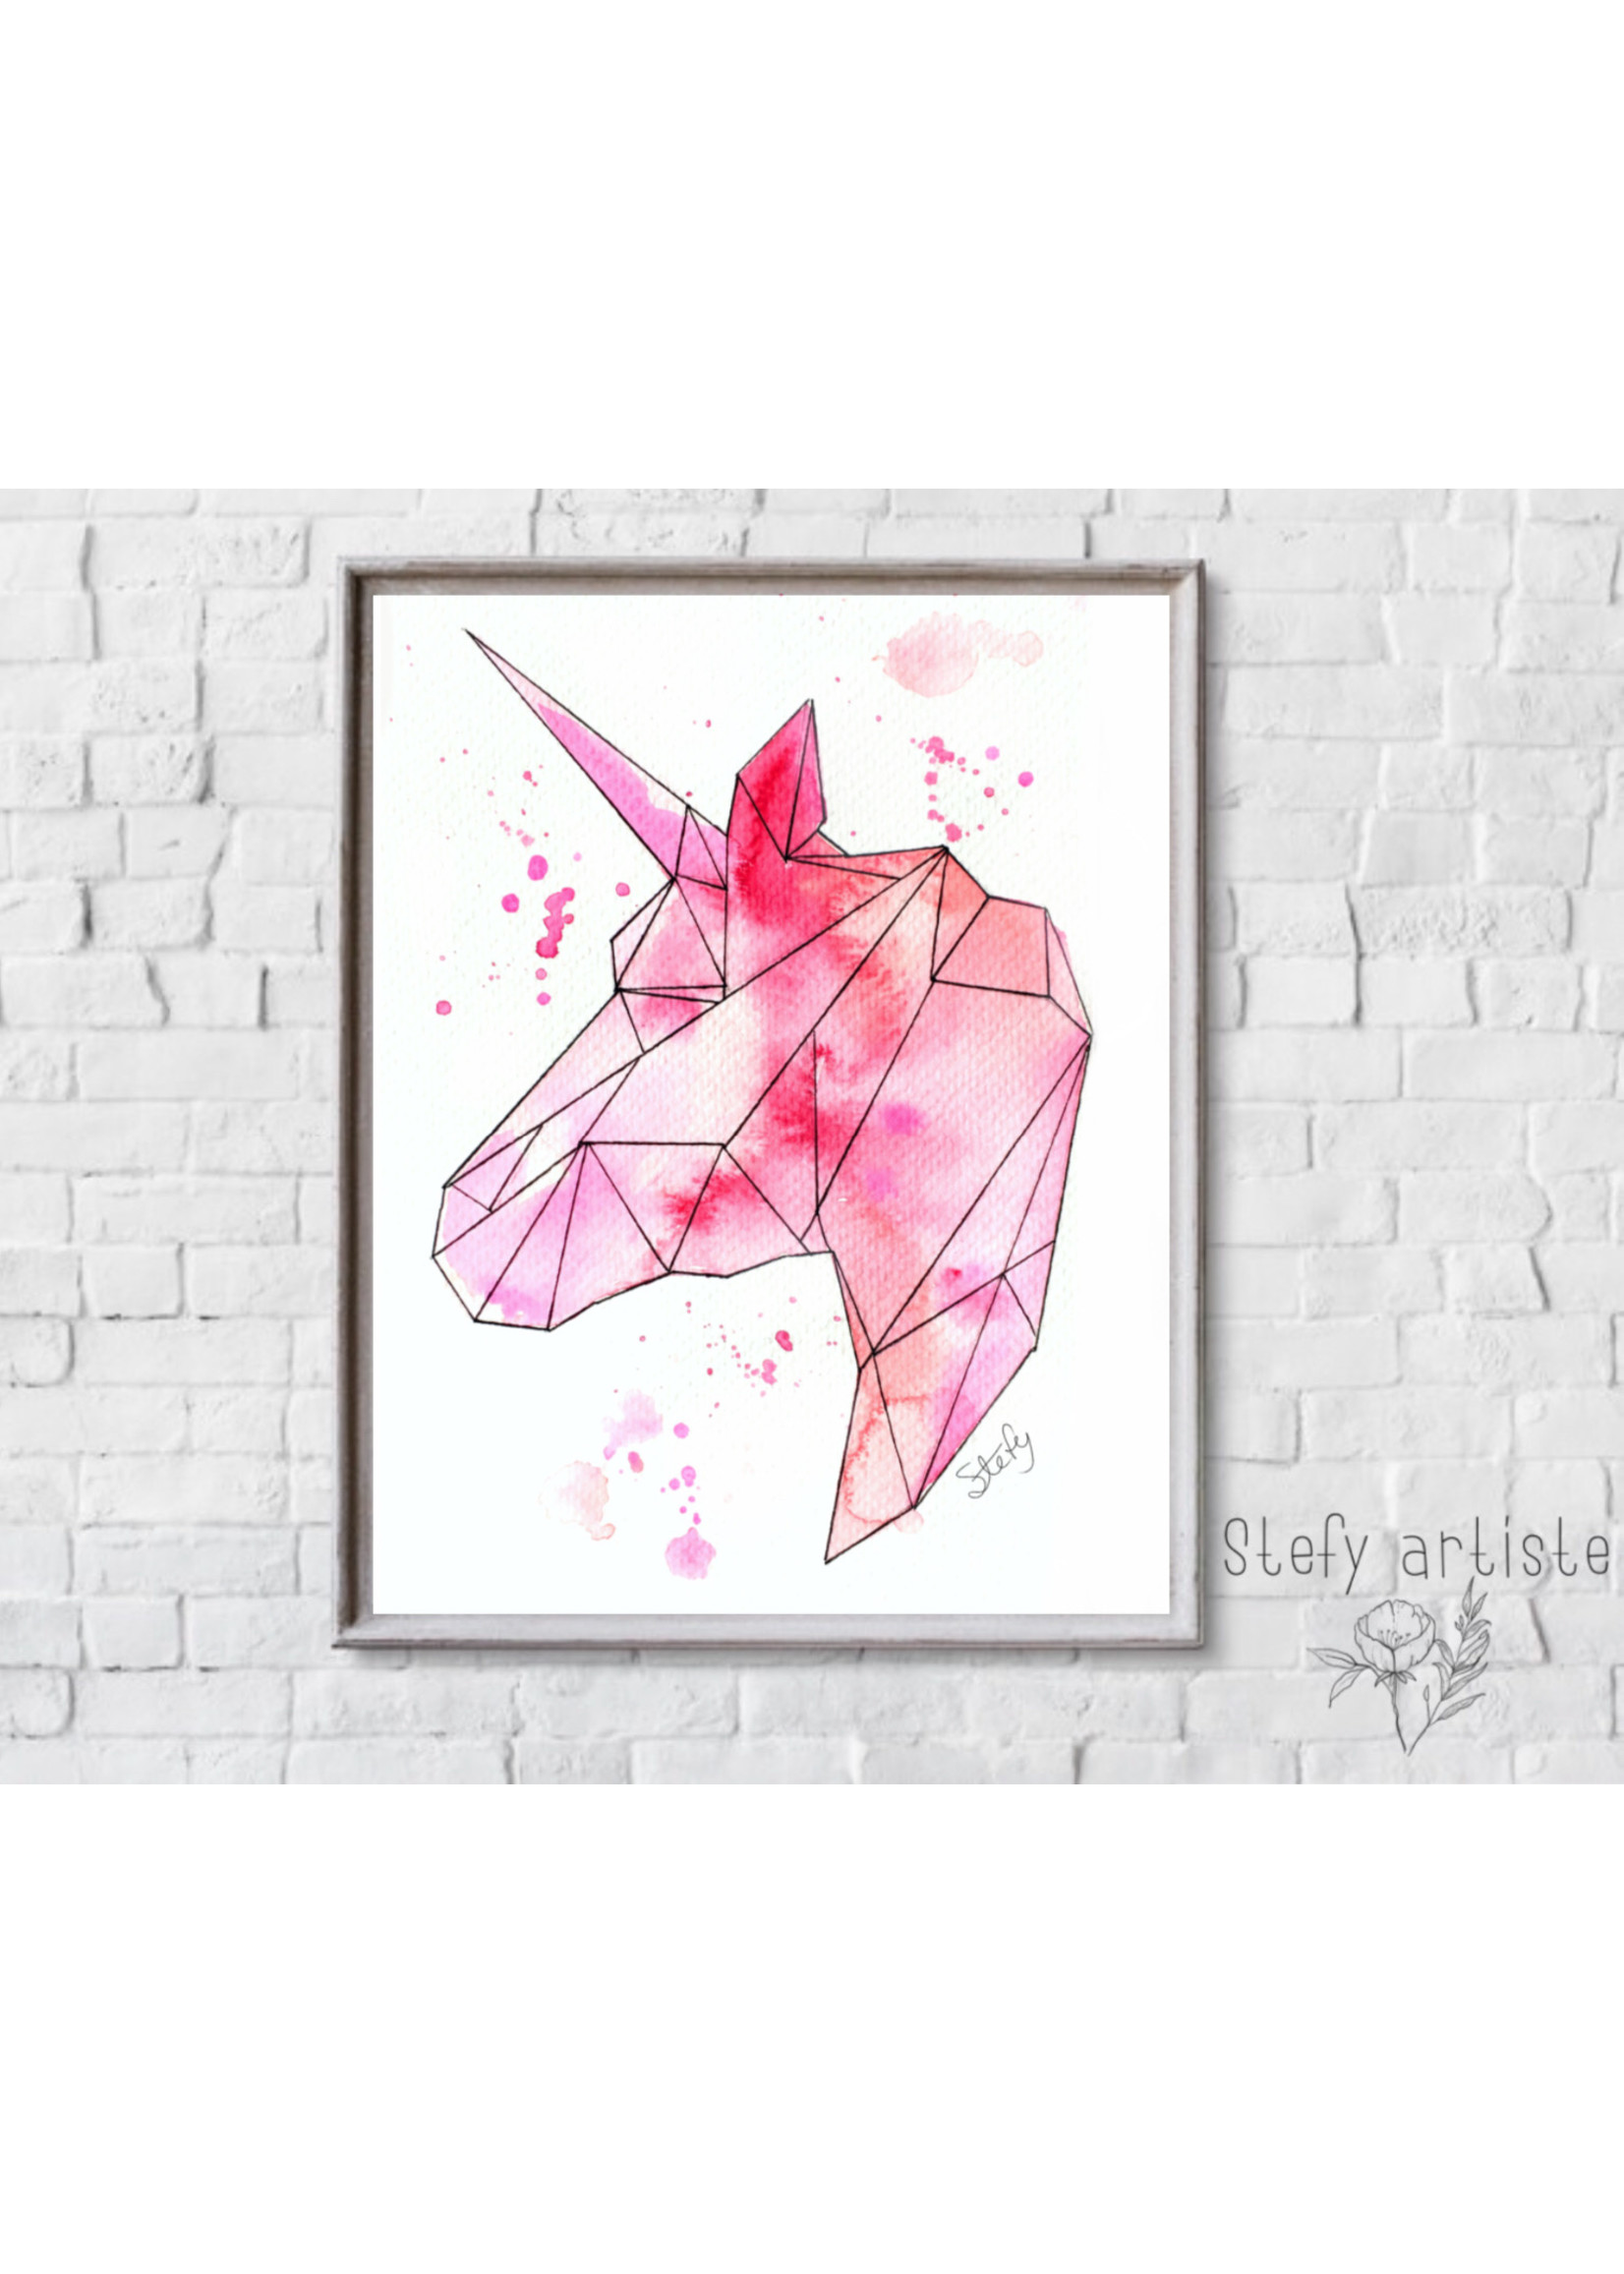 Stefy Artist || Illustration licorne rose